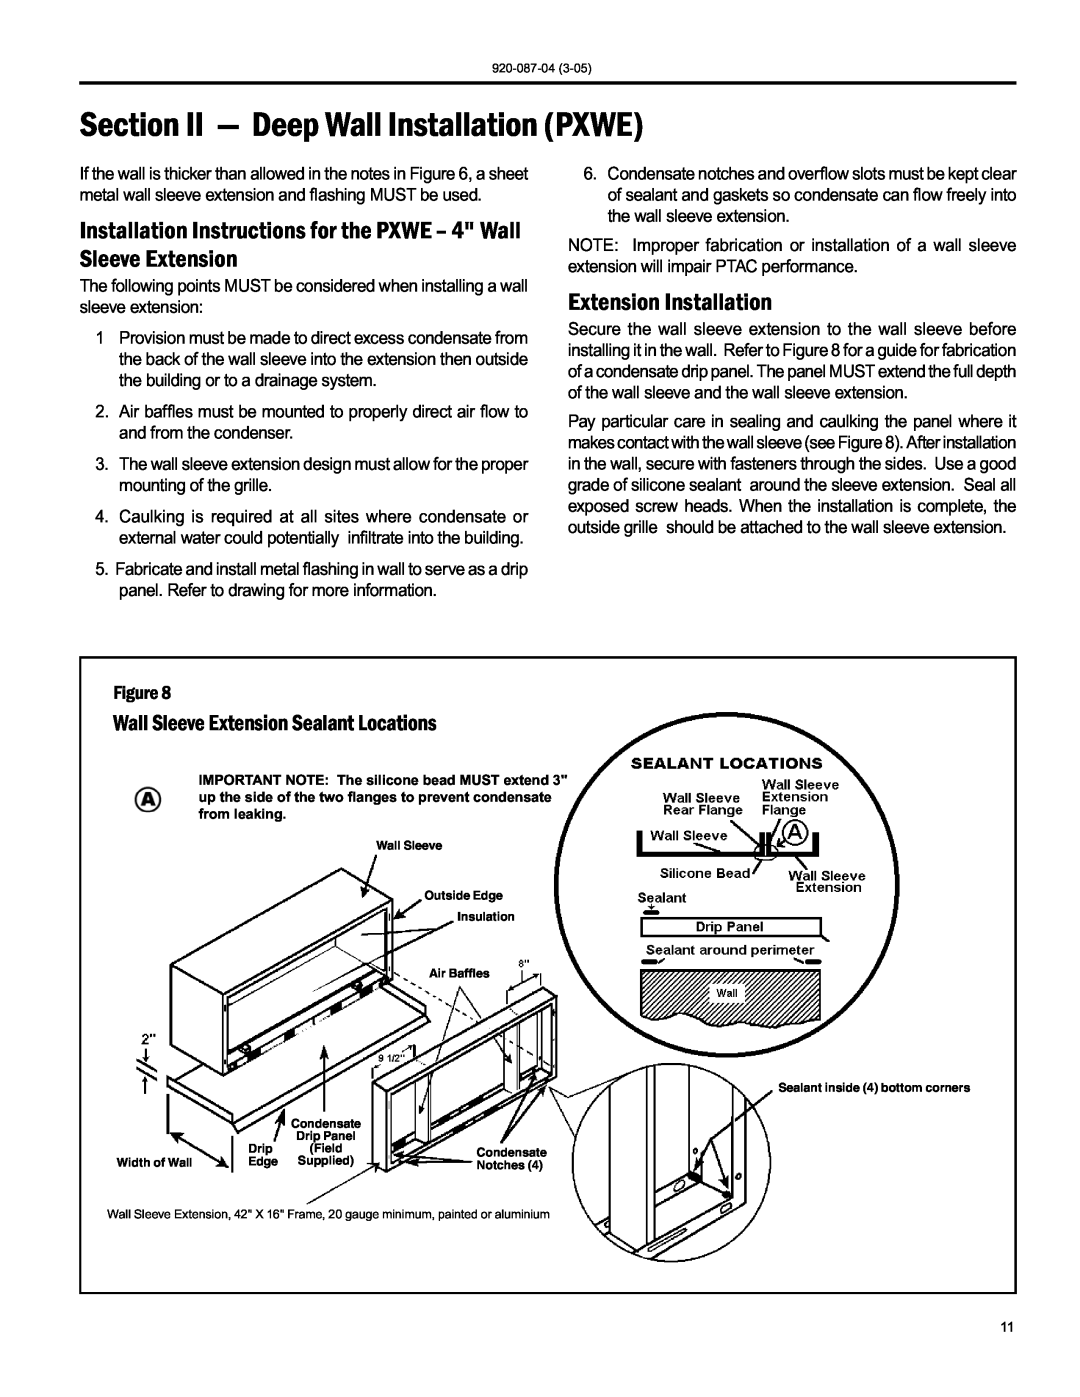 Friedrich 920-087-04 (3-05) manual Section II — Deep Wall Installation PXWE, Extension Installation 